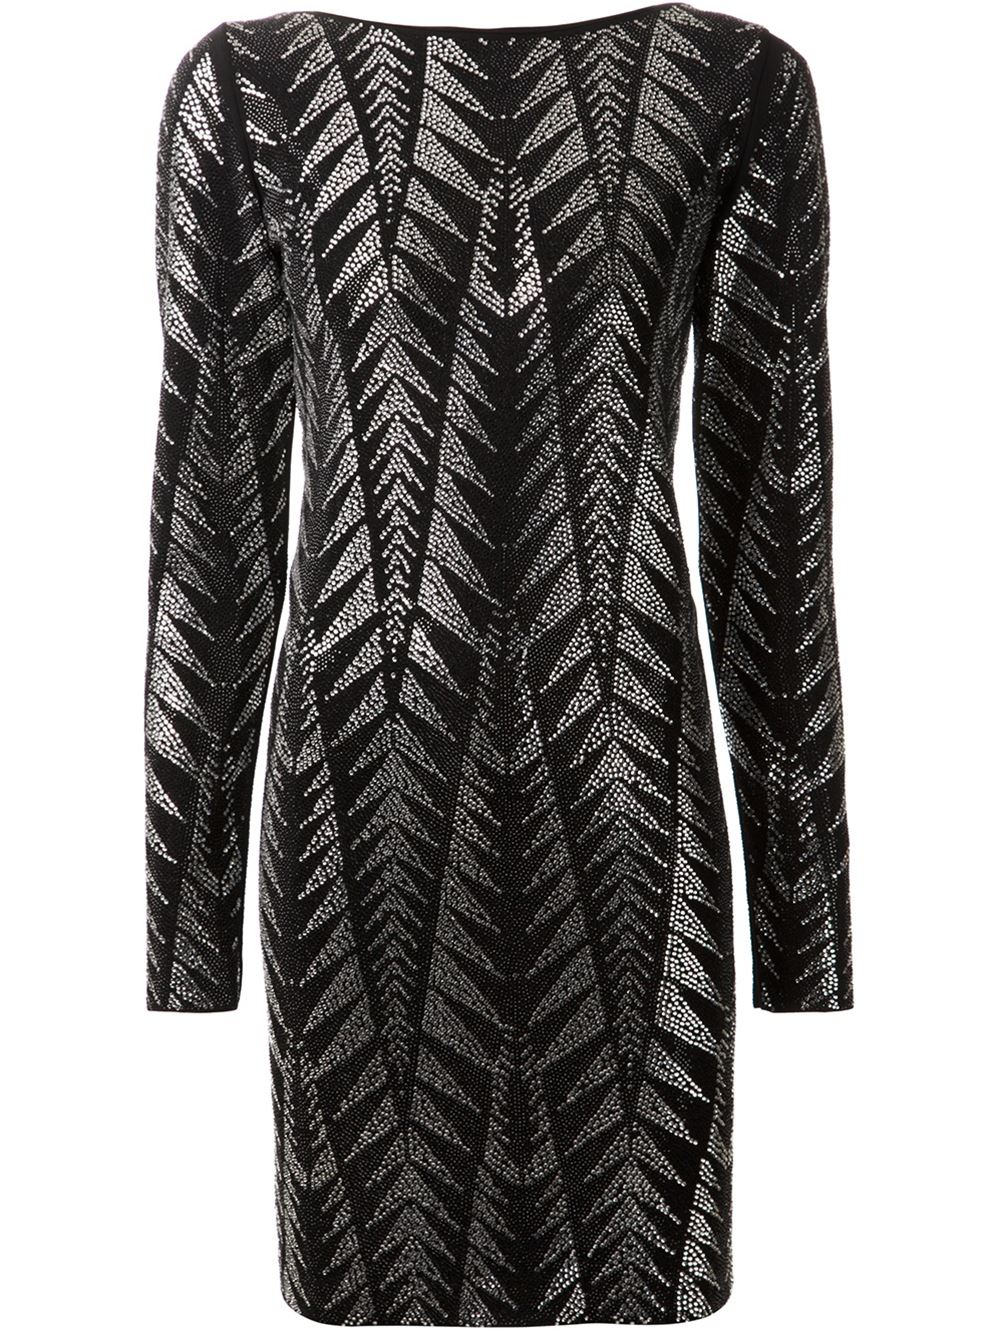 Balmain Sequin Dress in Black | Lyst